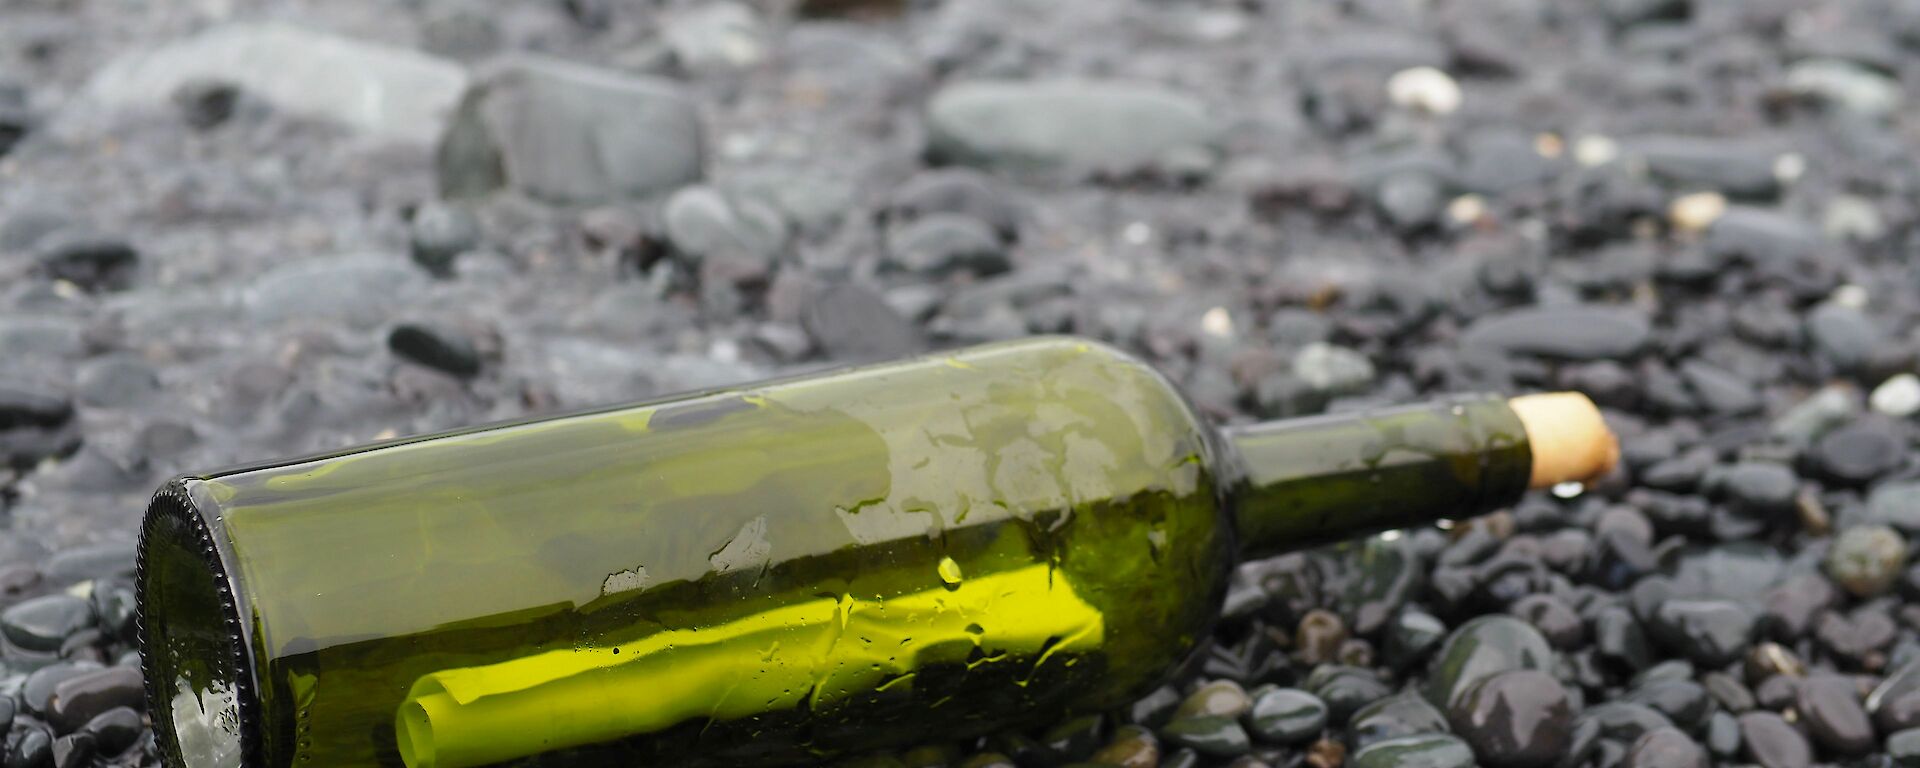 A green bottle lays on a black pebble beach